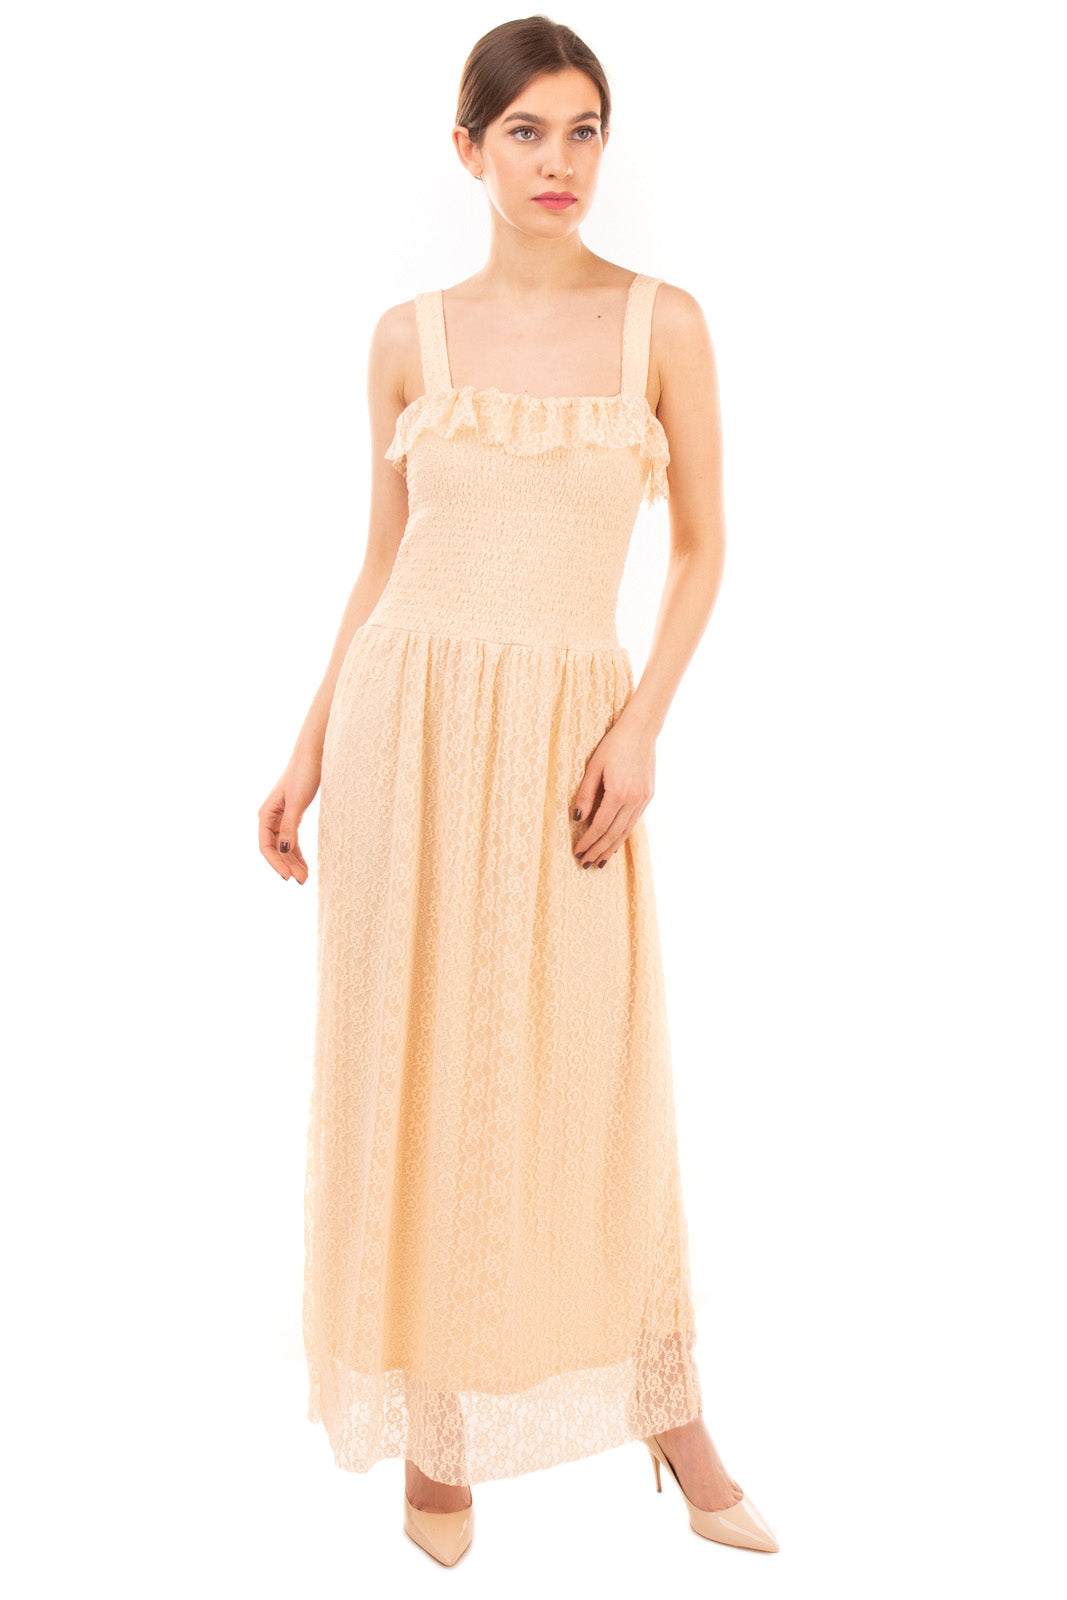 VERO MODA Lace Maxi Dress Size S  Fully Lined Ruffle Trim Shirred Sleeveless gallery main photo